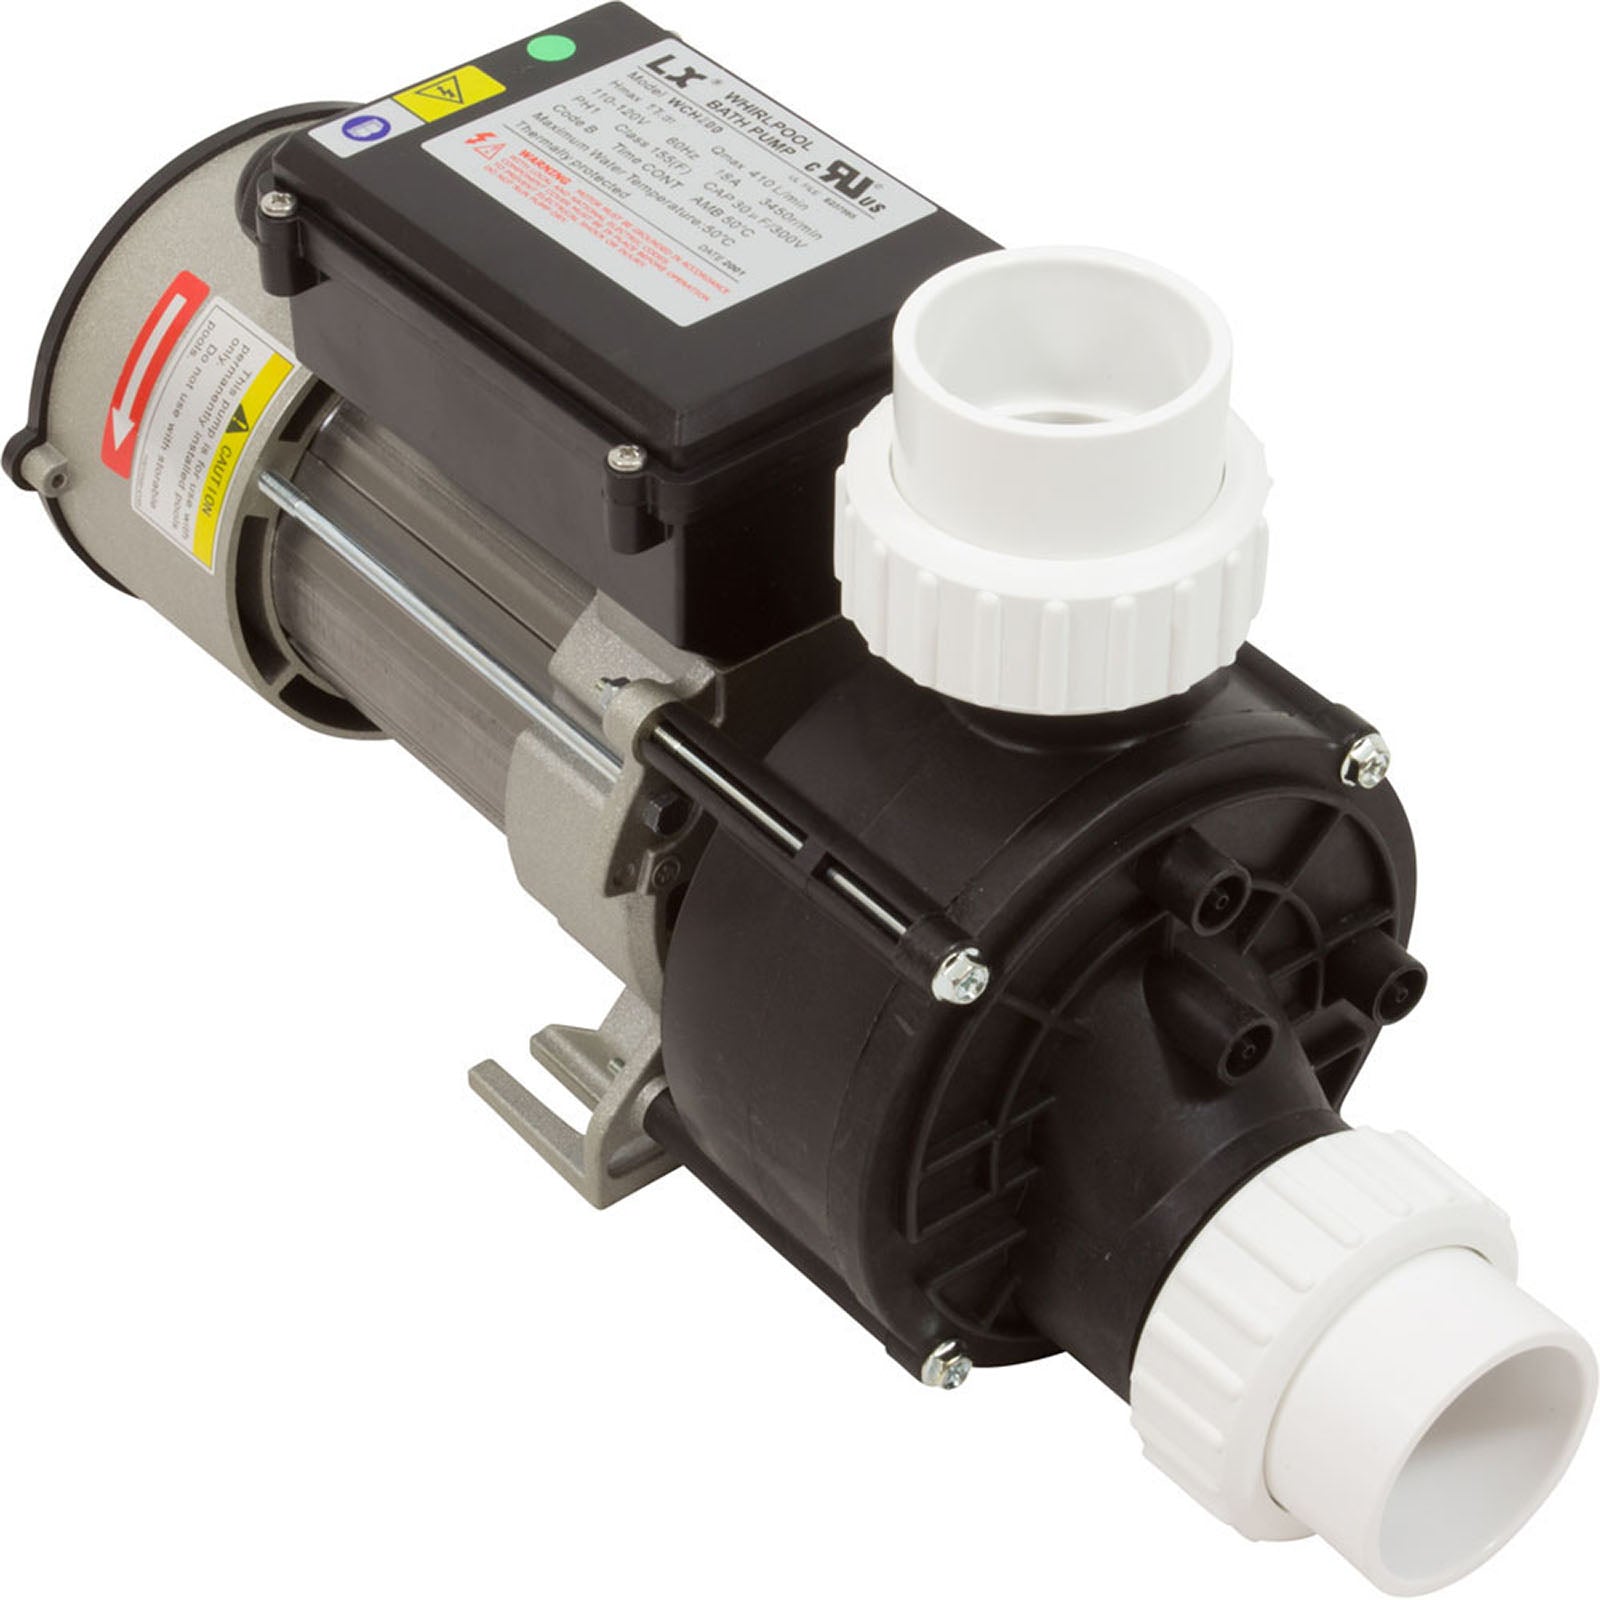 Kohler Proflex 5.5a Replacement Bath Pump, 5.5 amp, Air Switch, Cord